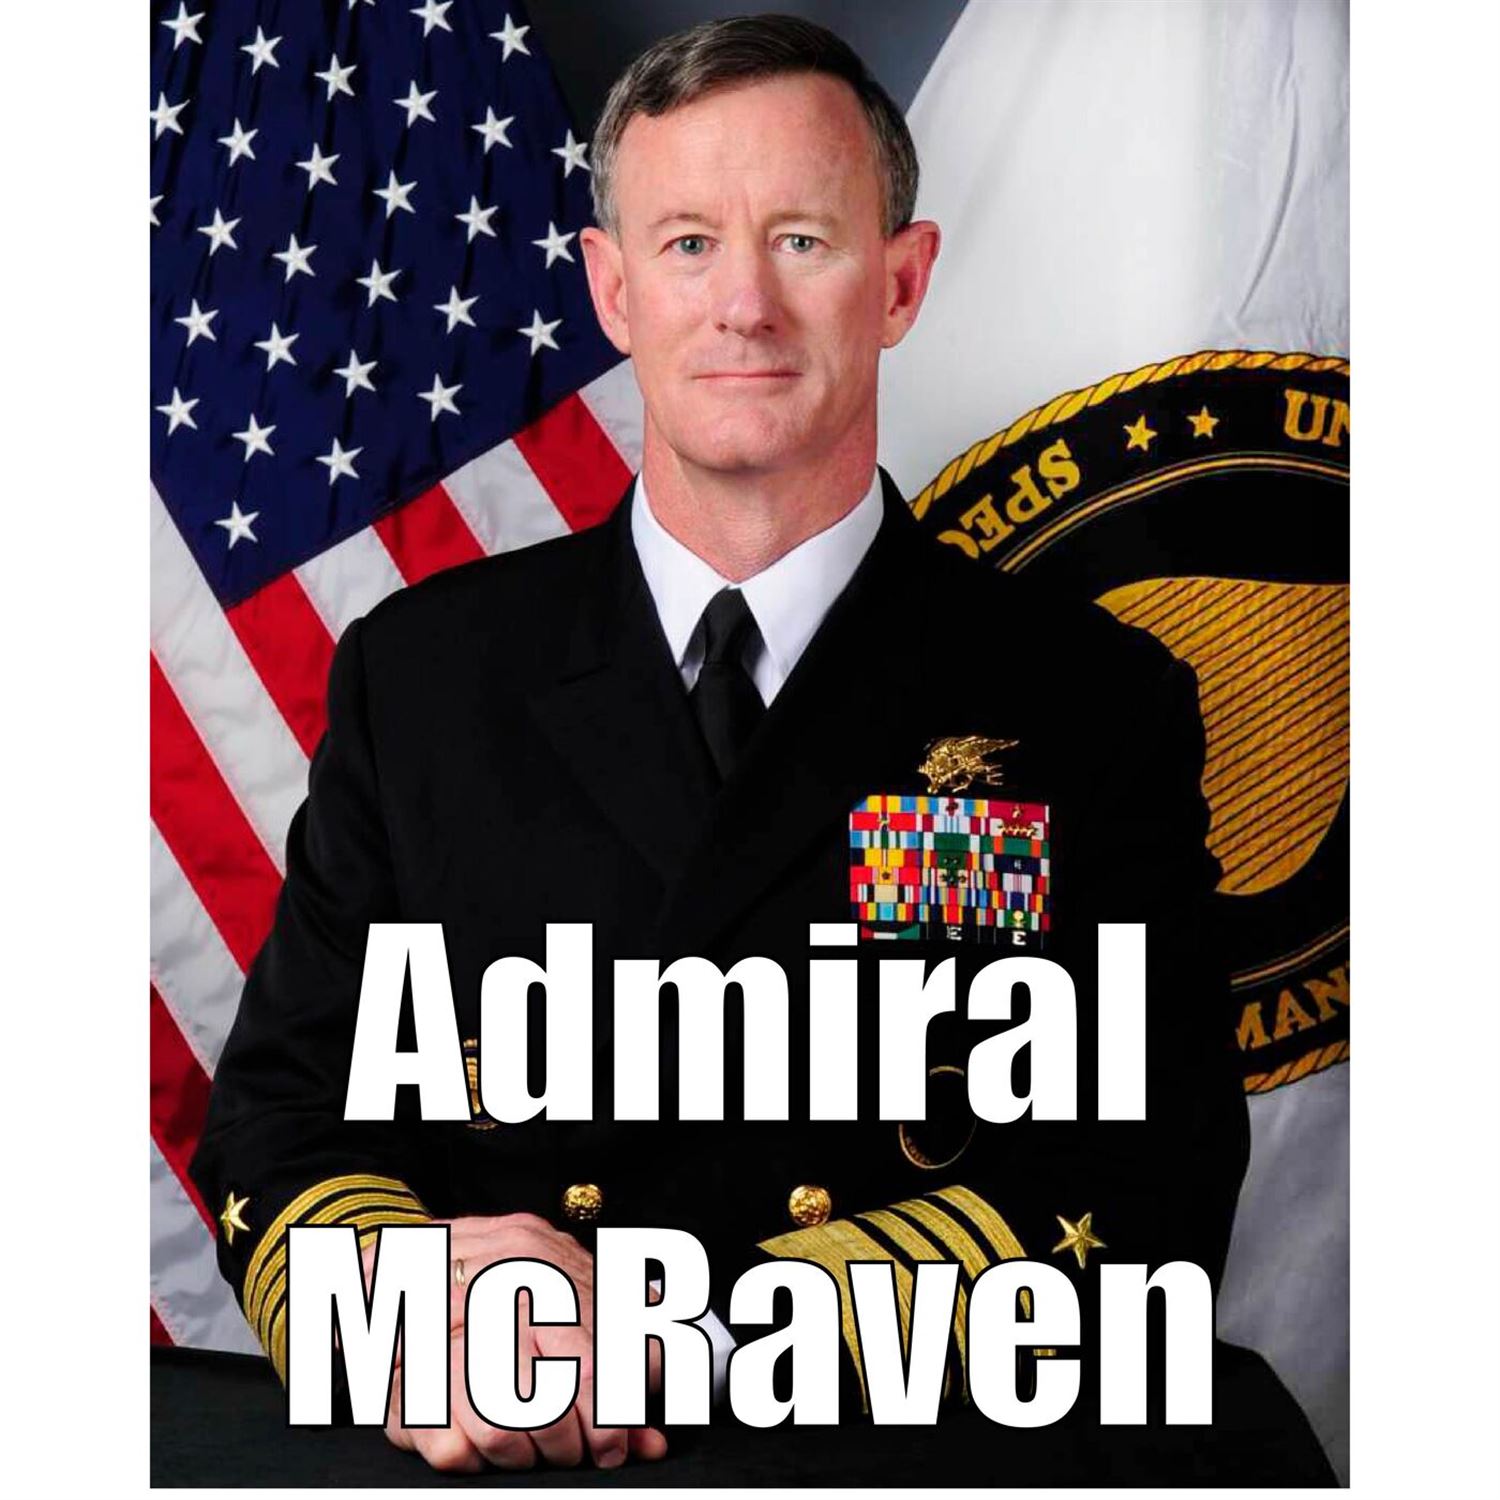 So was Admiral McRaven